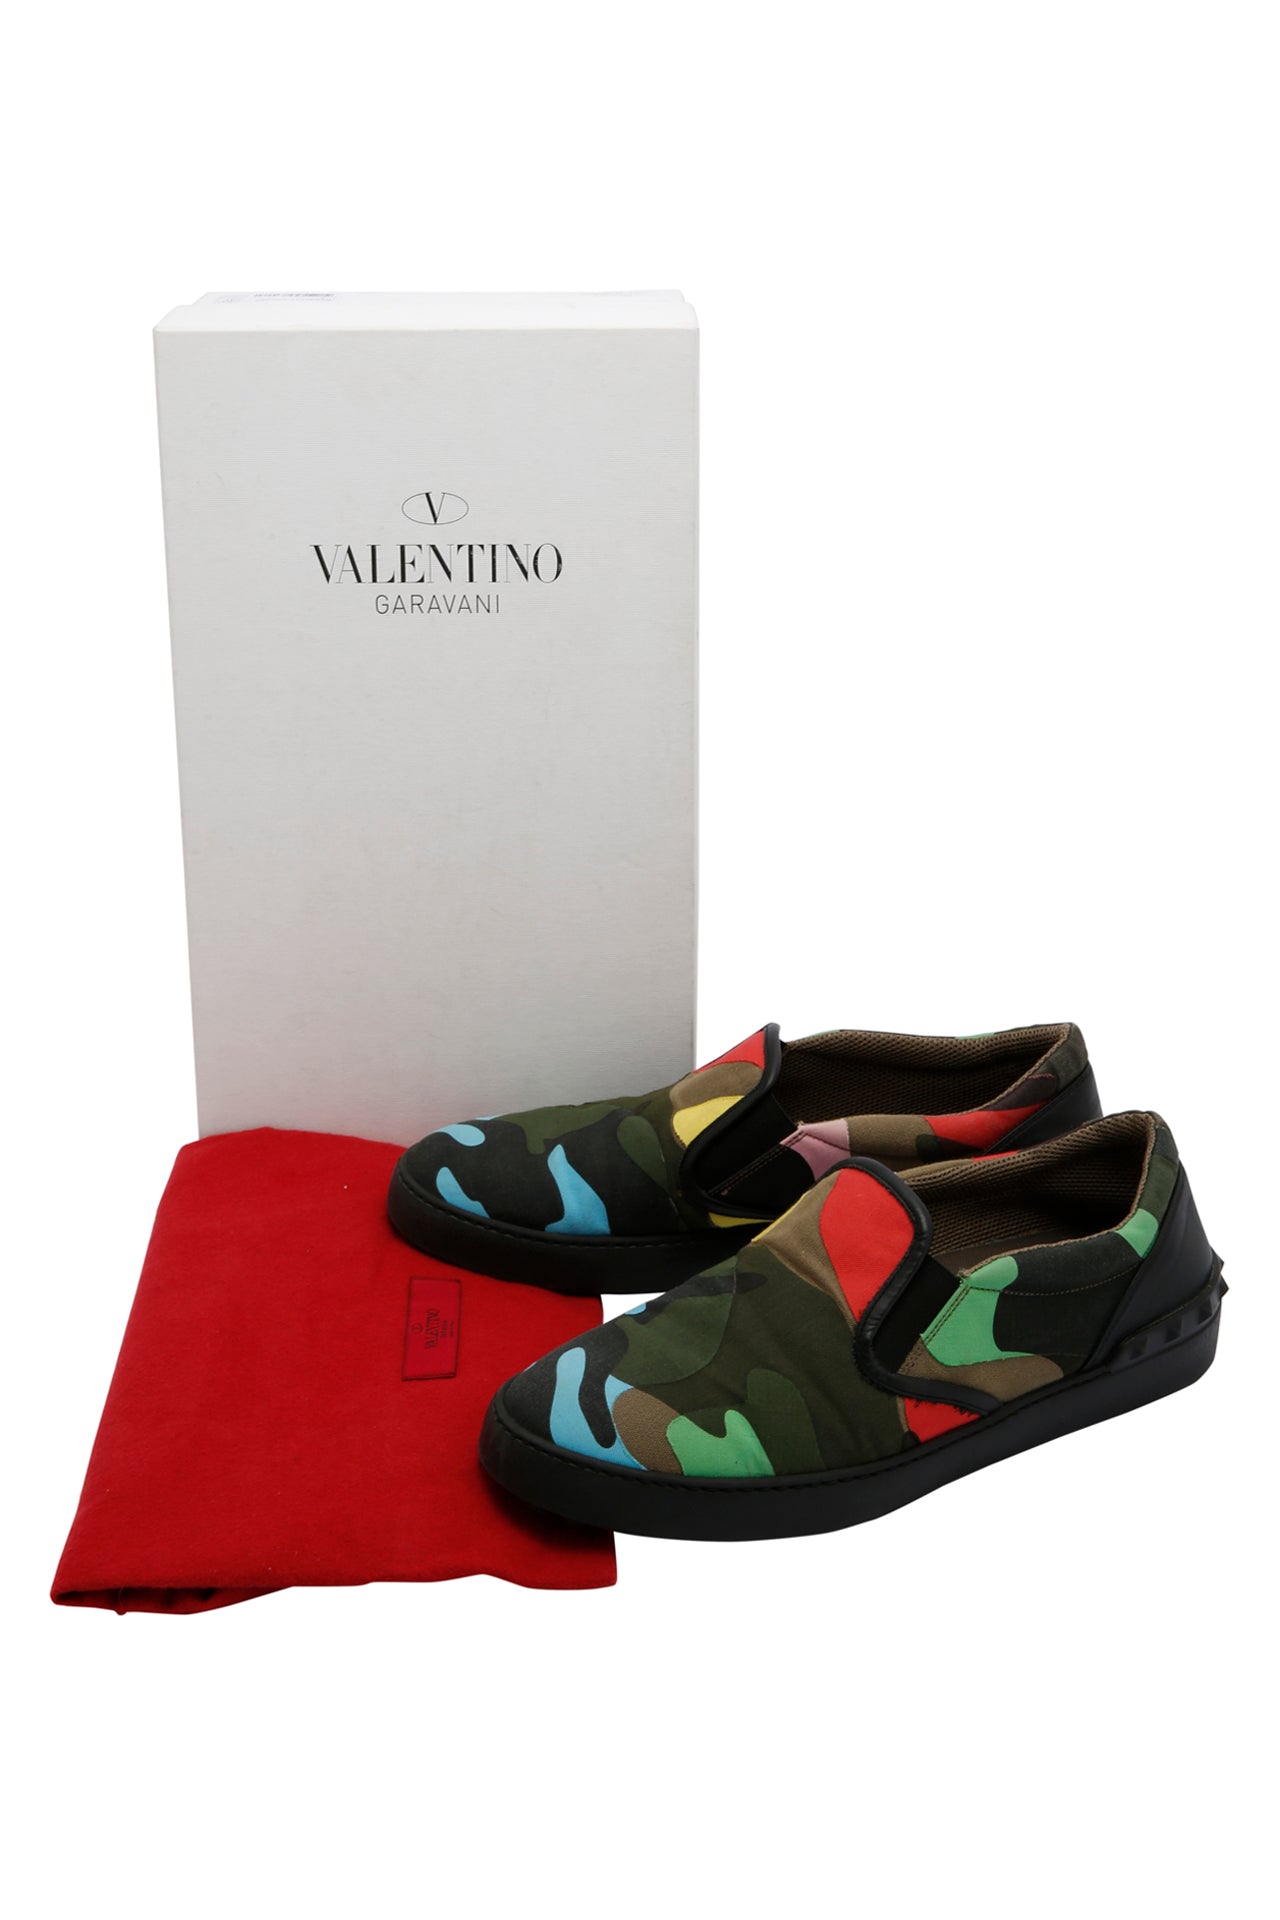 Valentino Psychedelic Camo Canvas Skate Sneakers